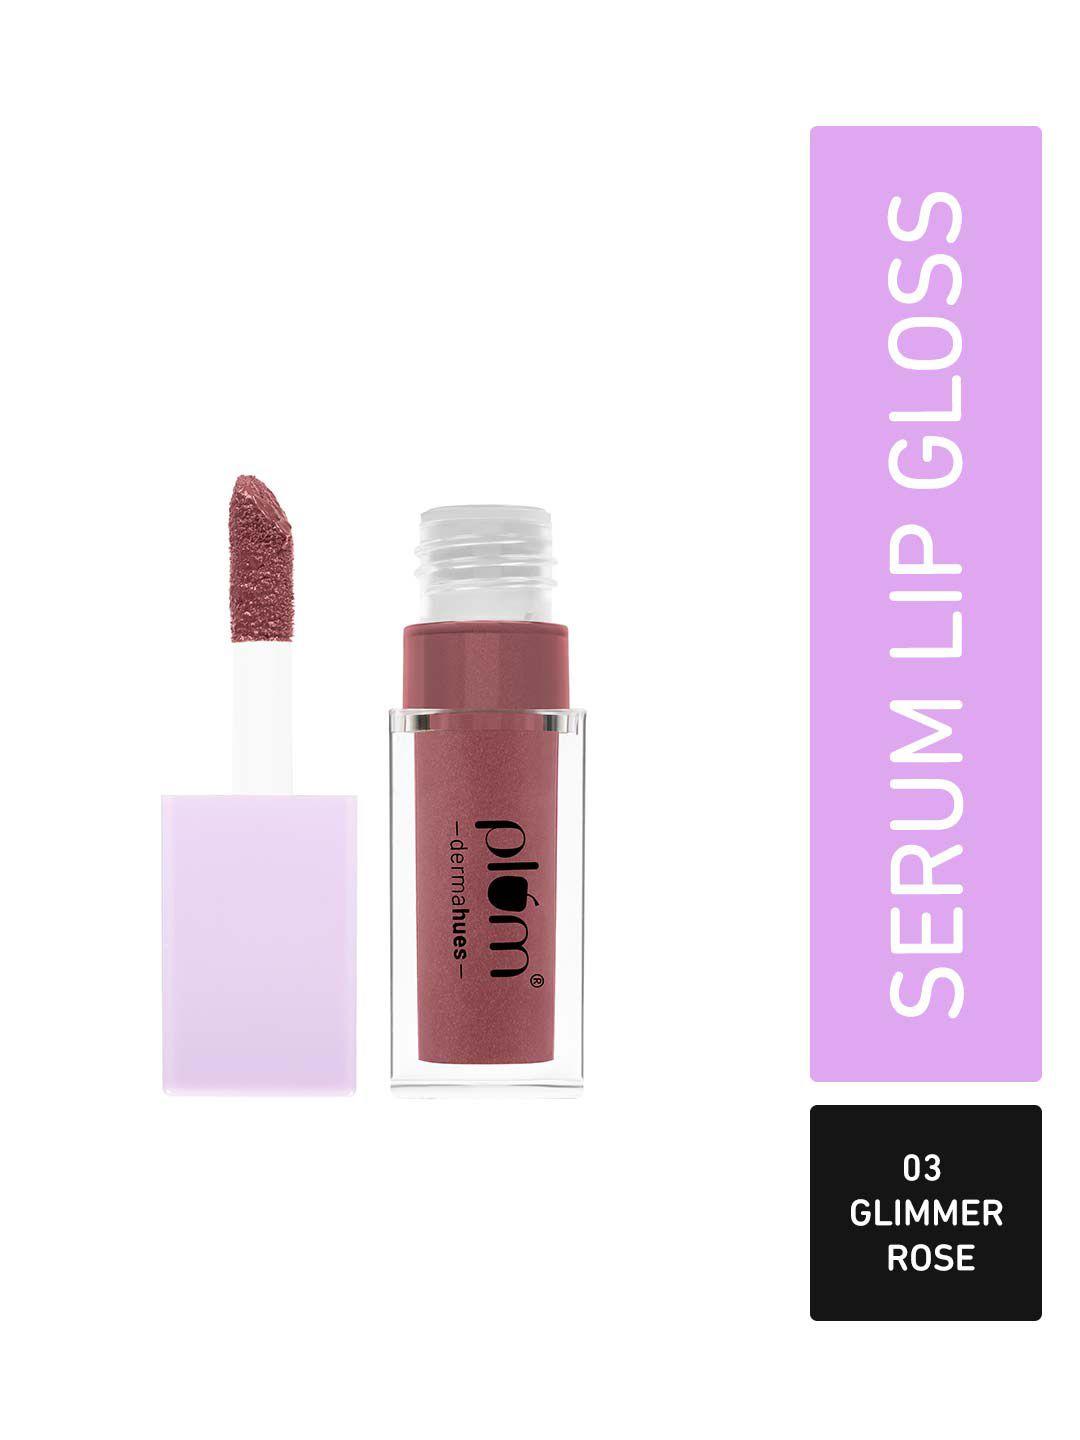 plum keep it glossy highly pigmented serum lip gloss - glimmer rose 03